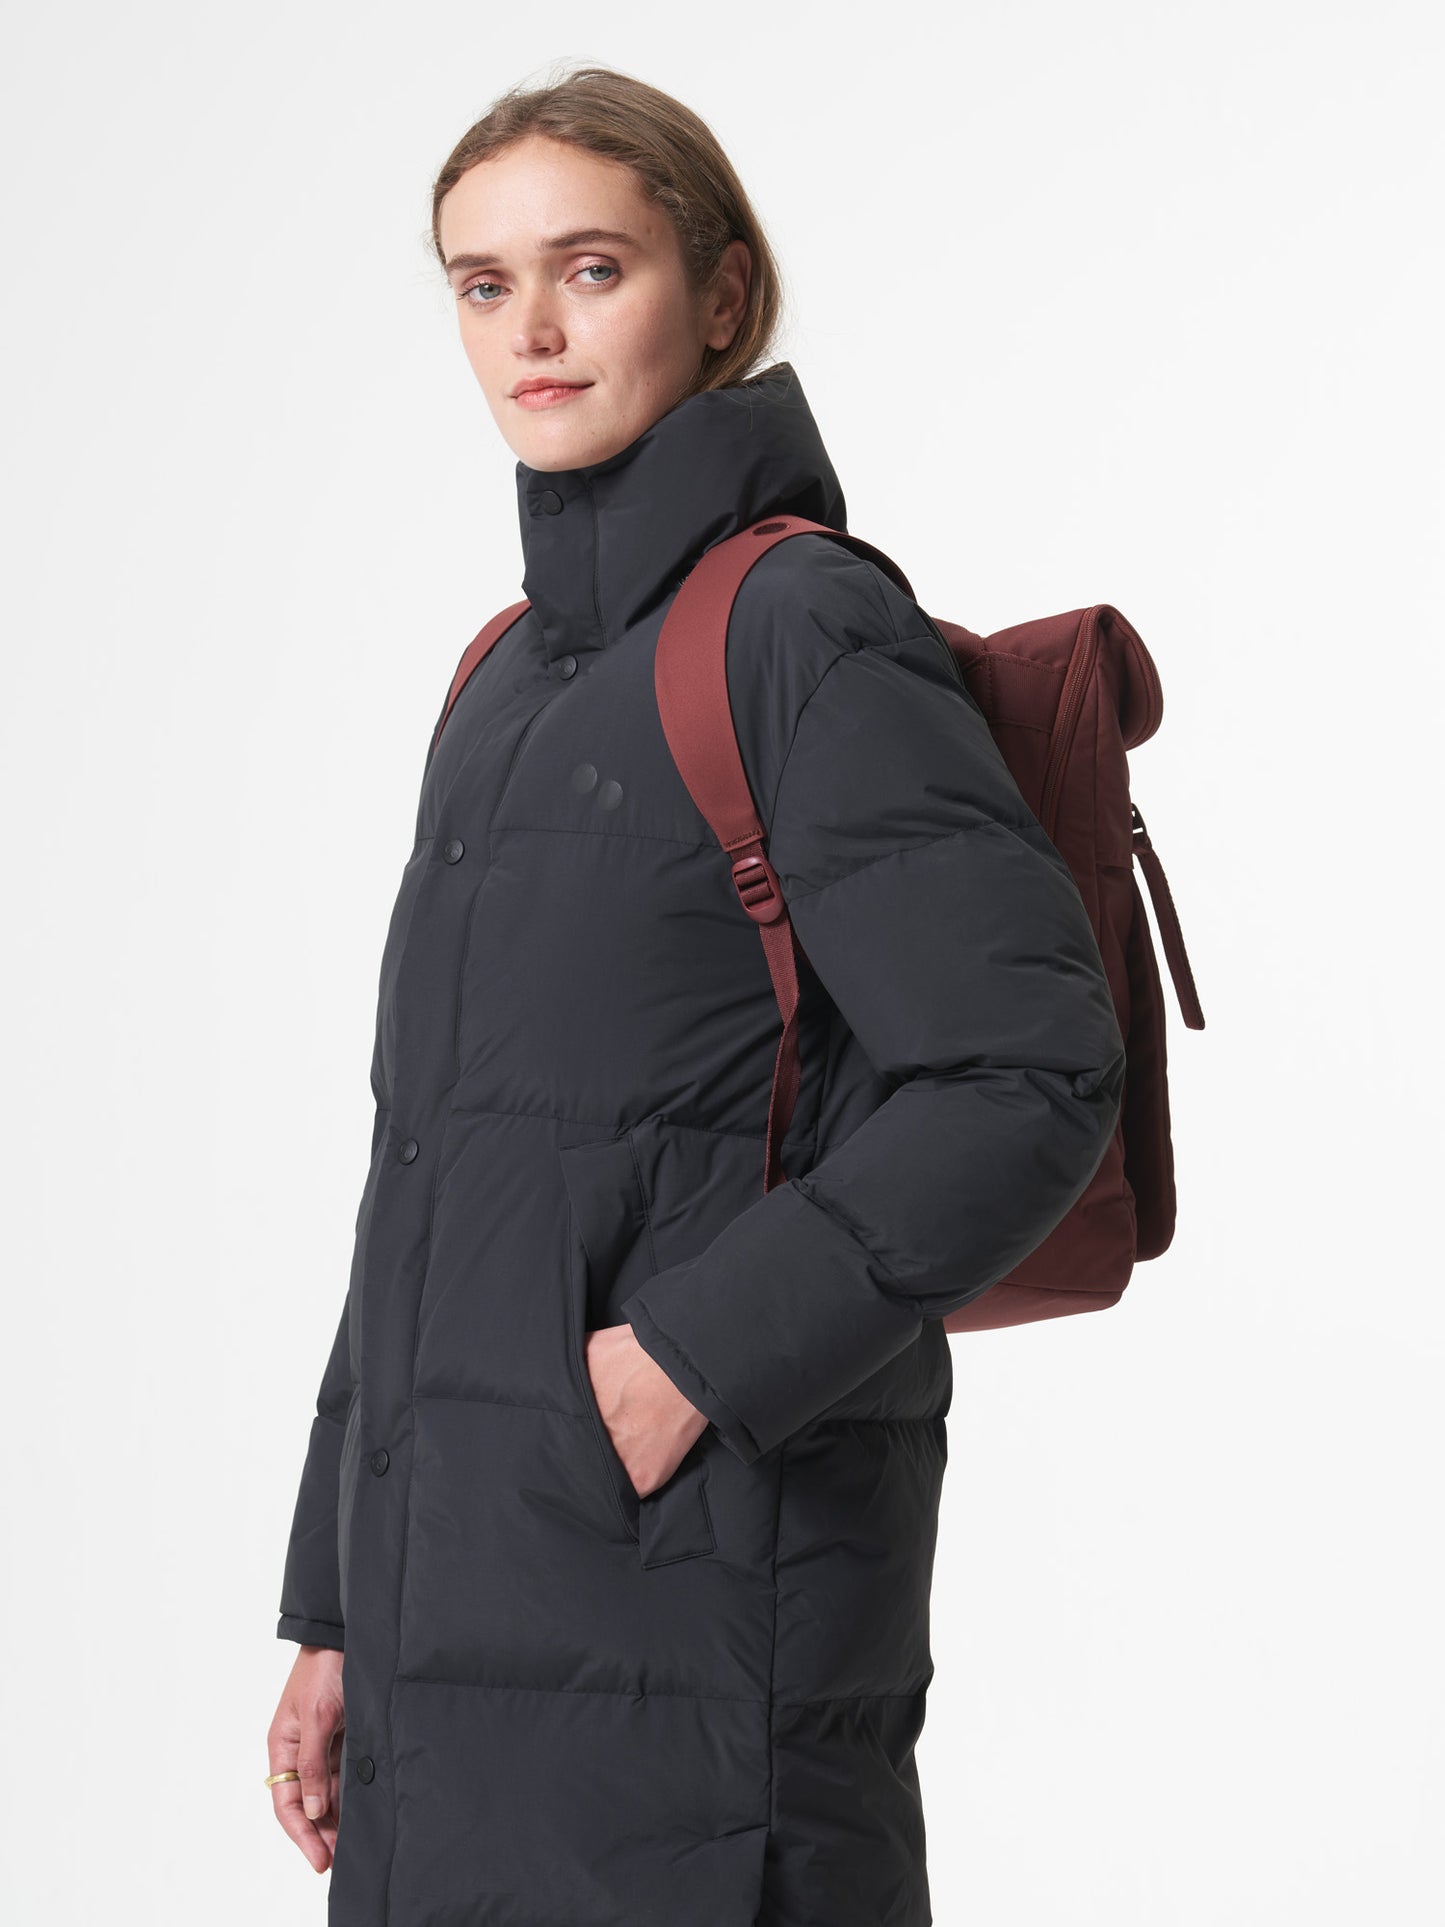 pinqponq-backpack-Klak-Pinot-Red-model-side